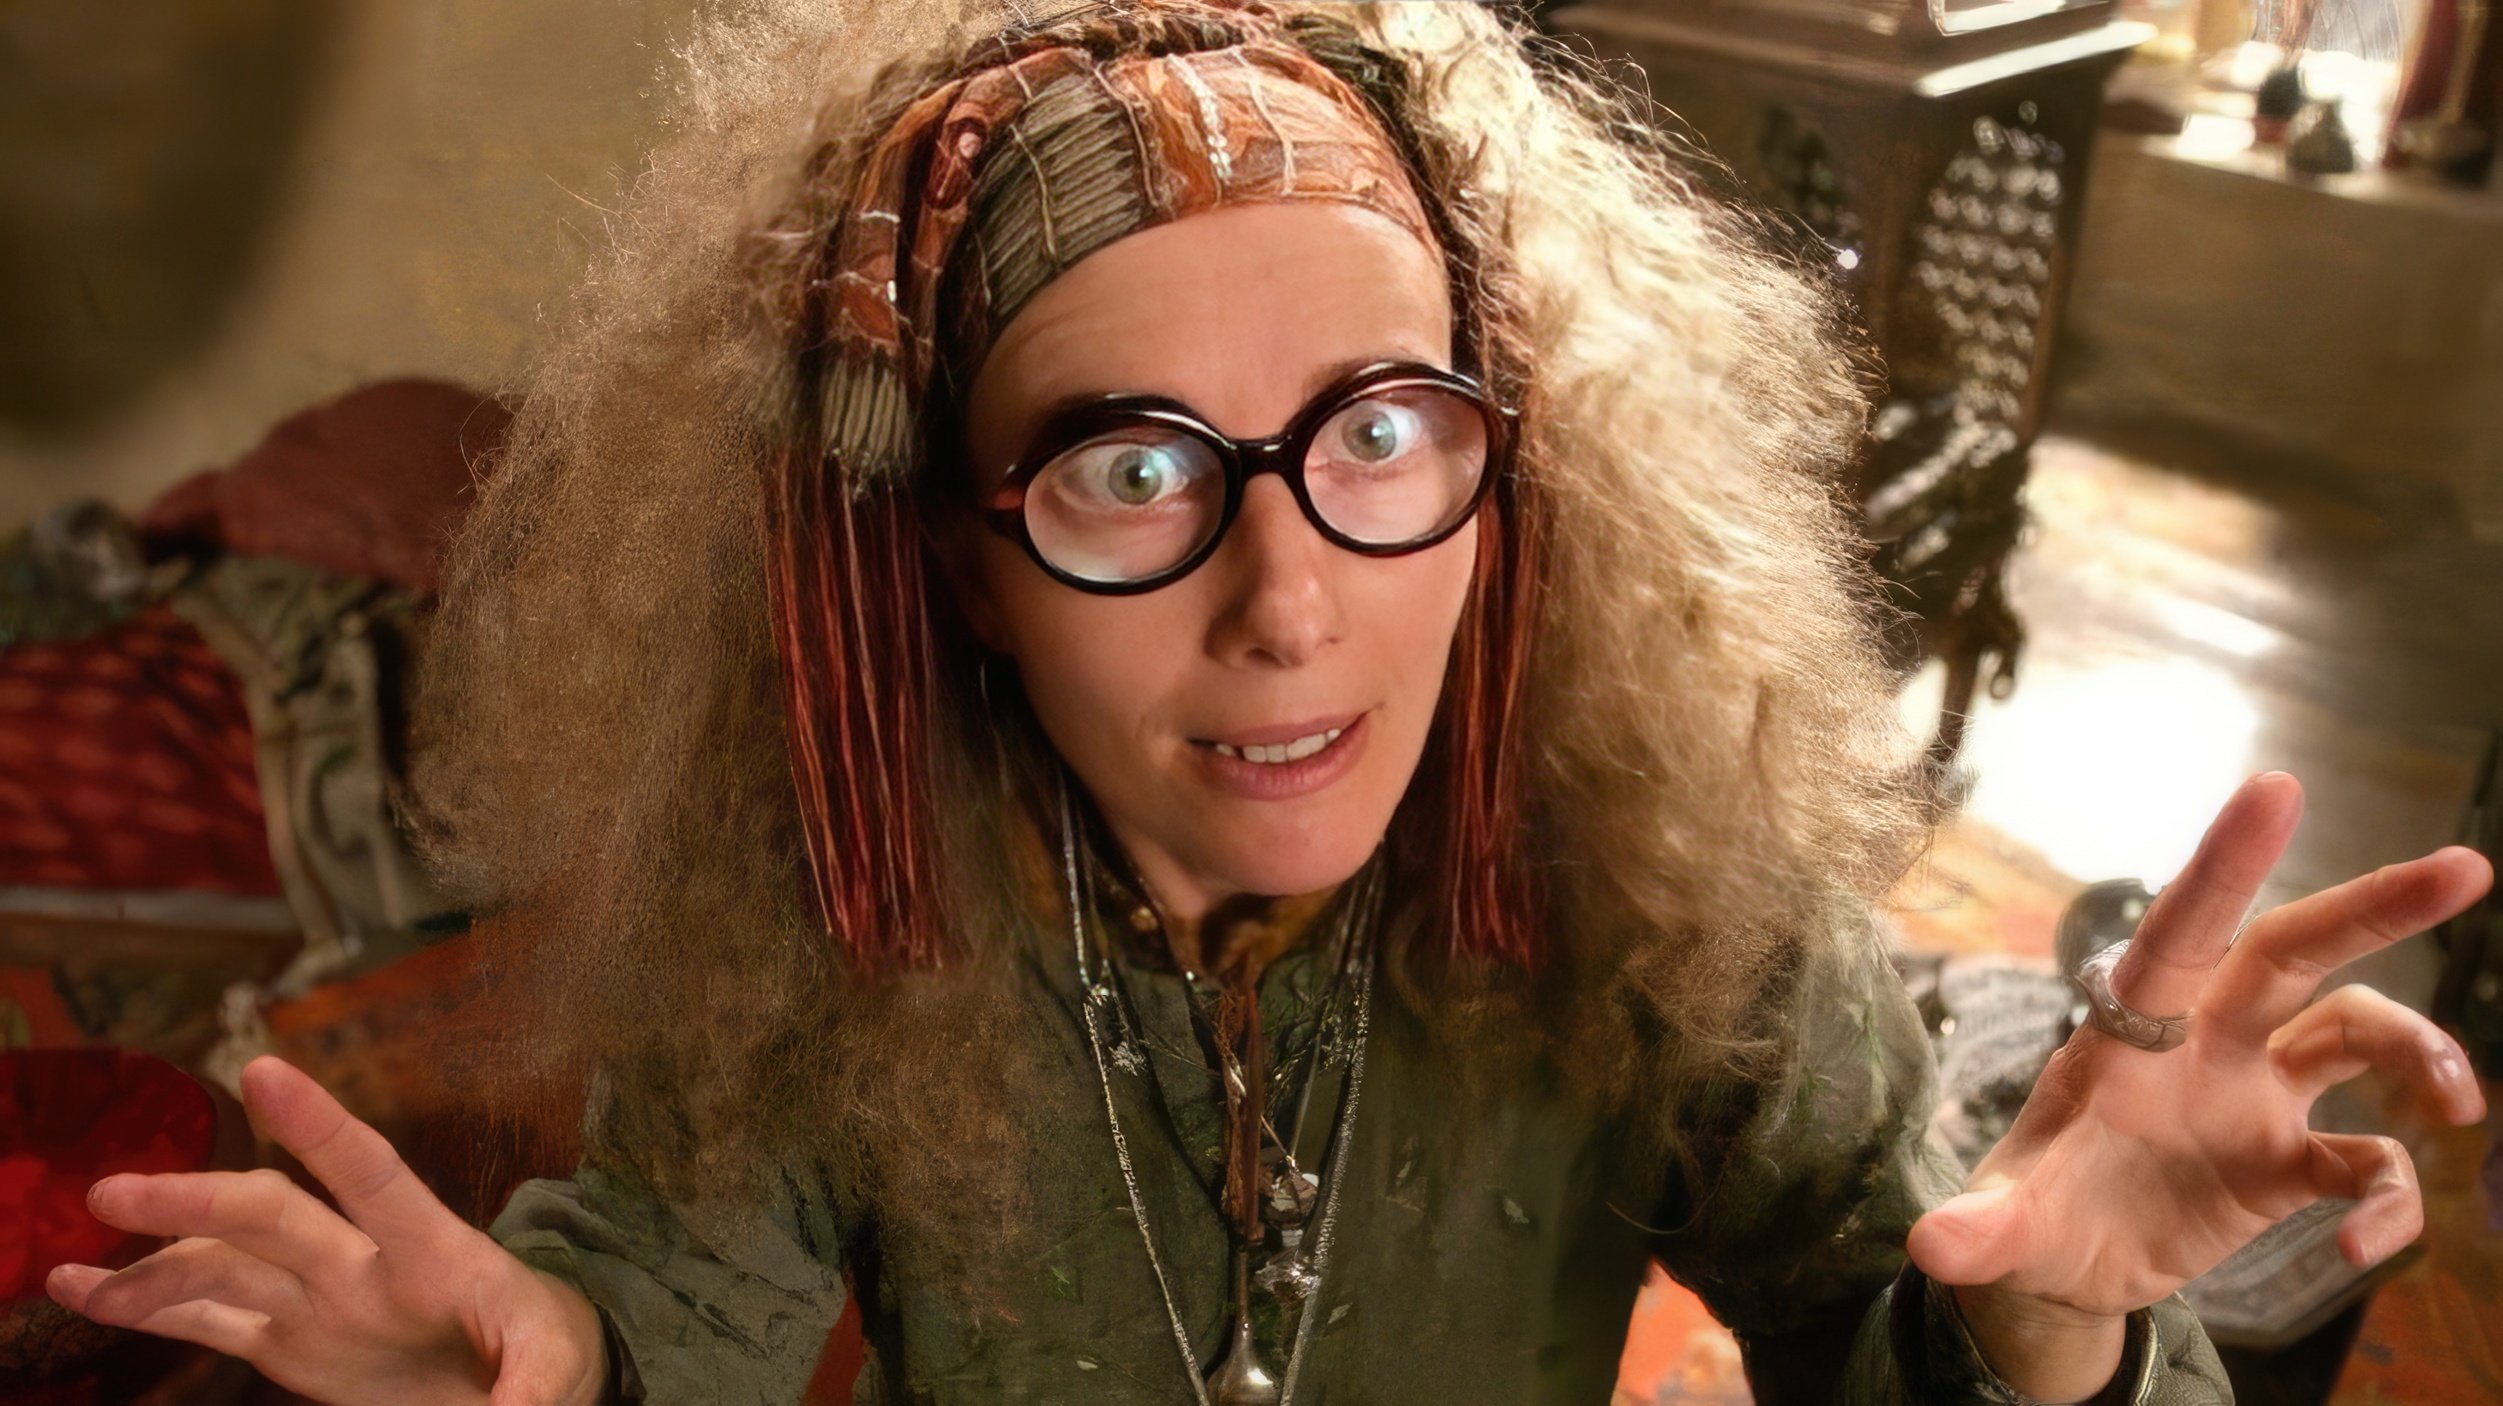 In 'Harry Potter', Emma Thompson played Professor Trelawney